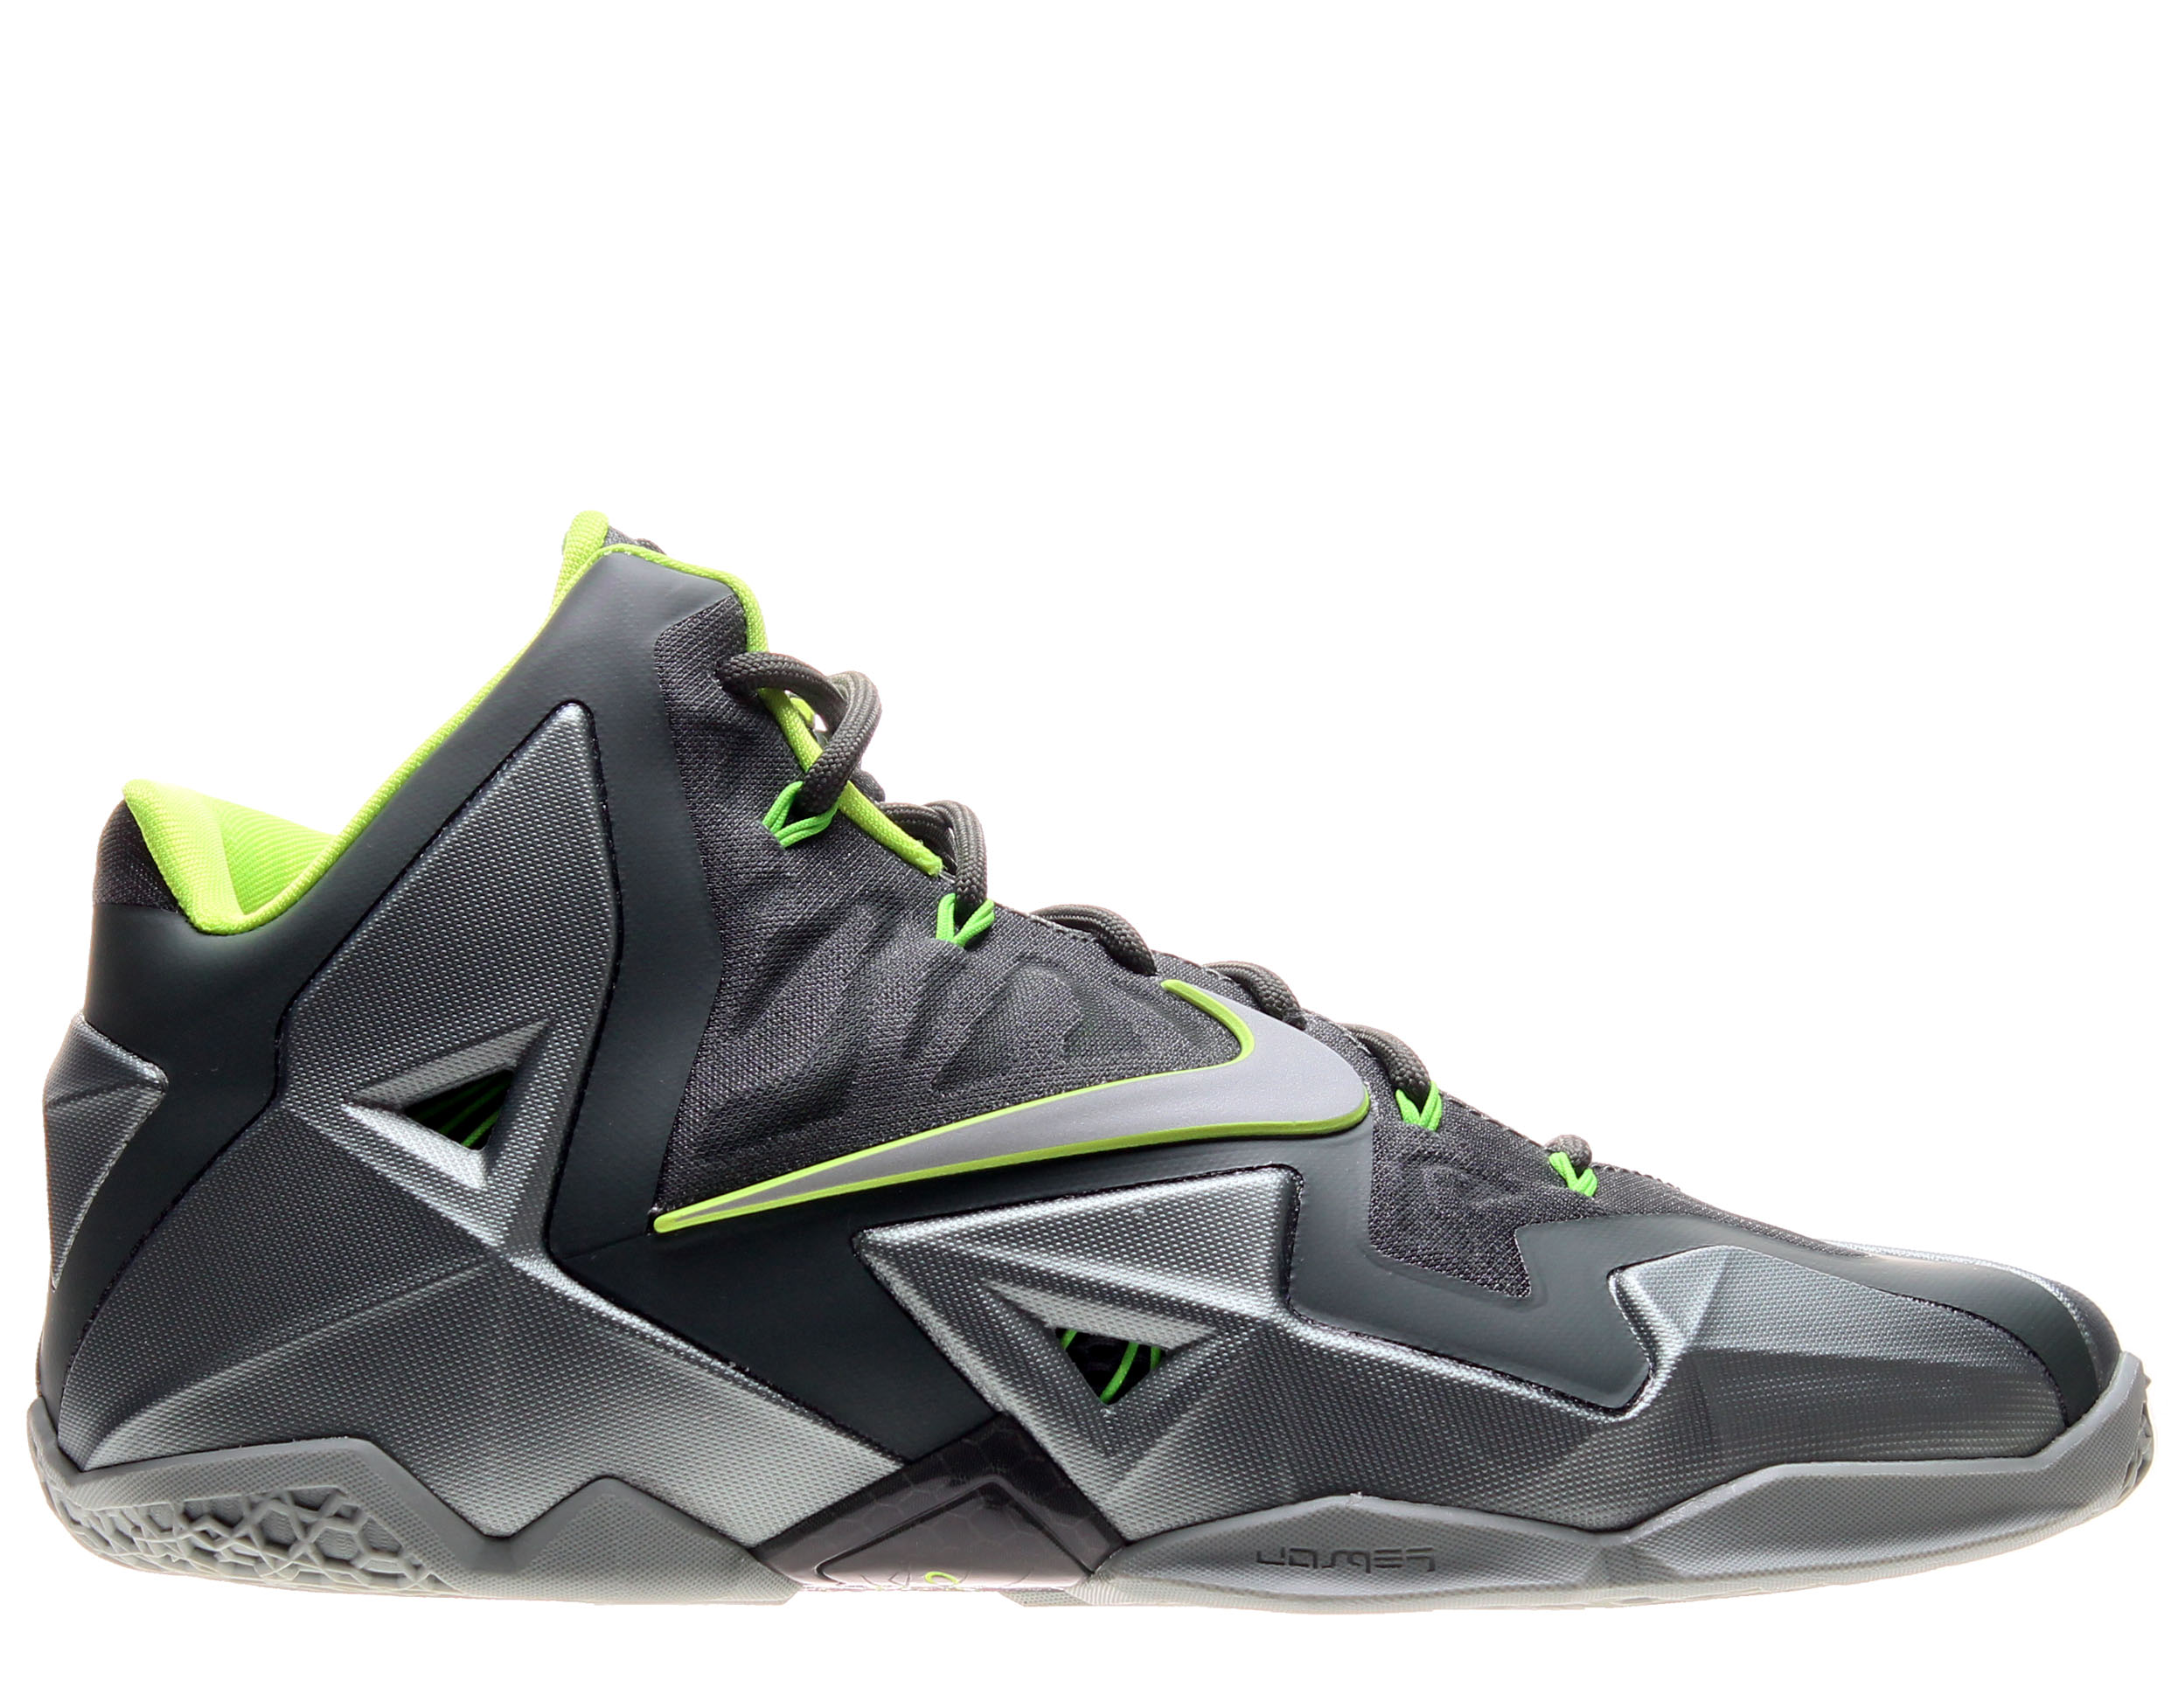 Nike Lebron XI Men's Basketball Shoes MC Green/Spray-Dark MC Green/Volt 616175-300 (12 D(M) US) - image 2 of 6